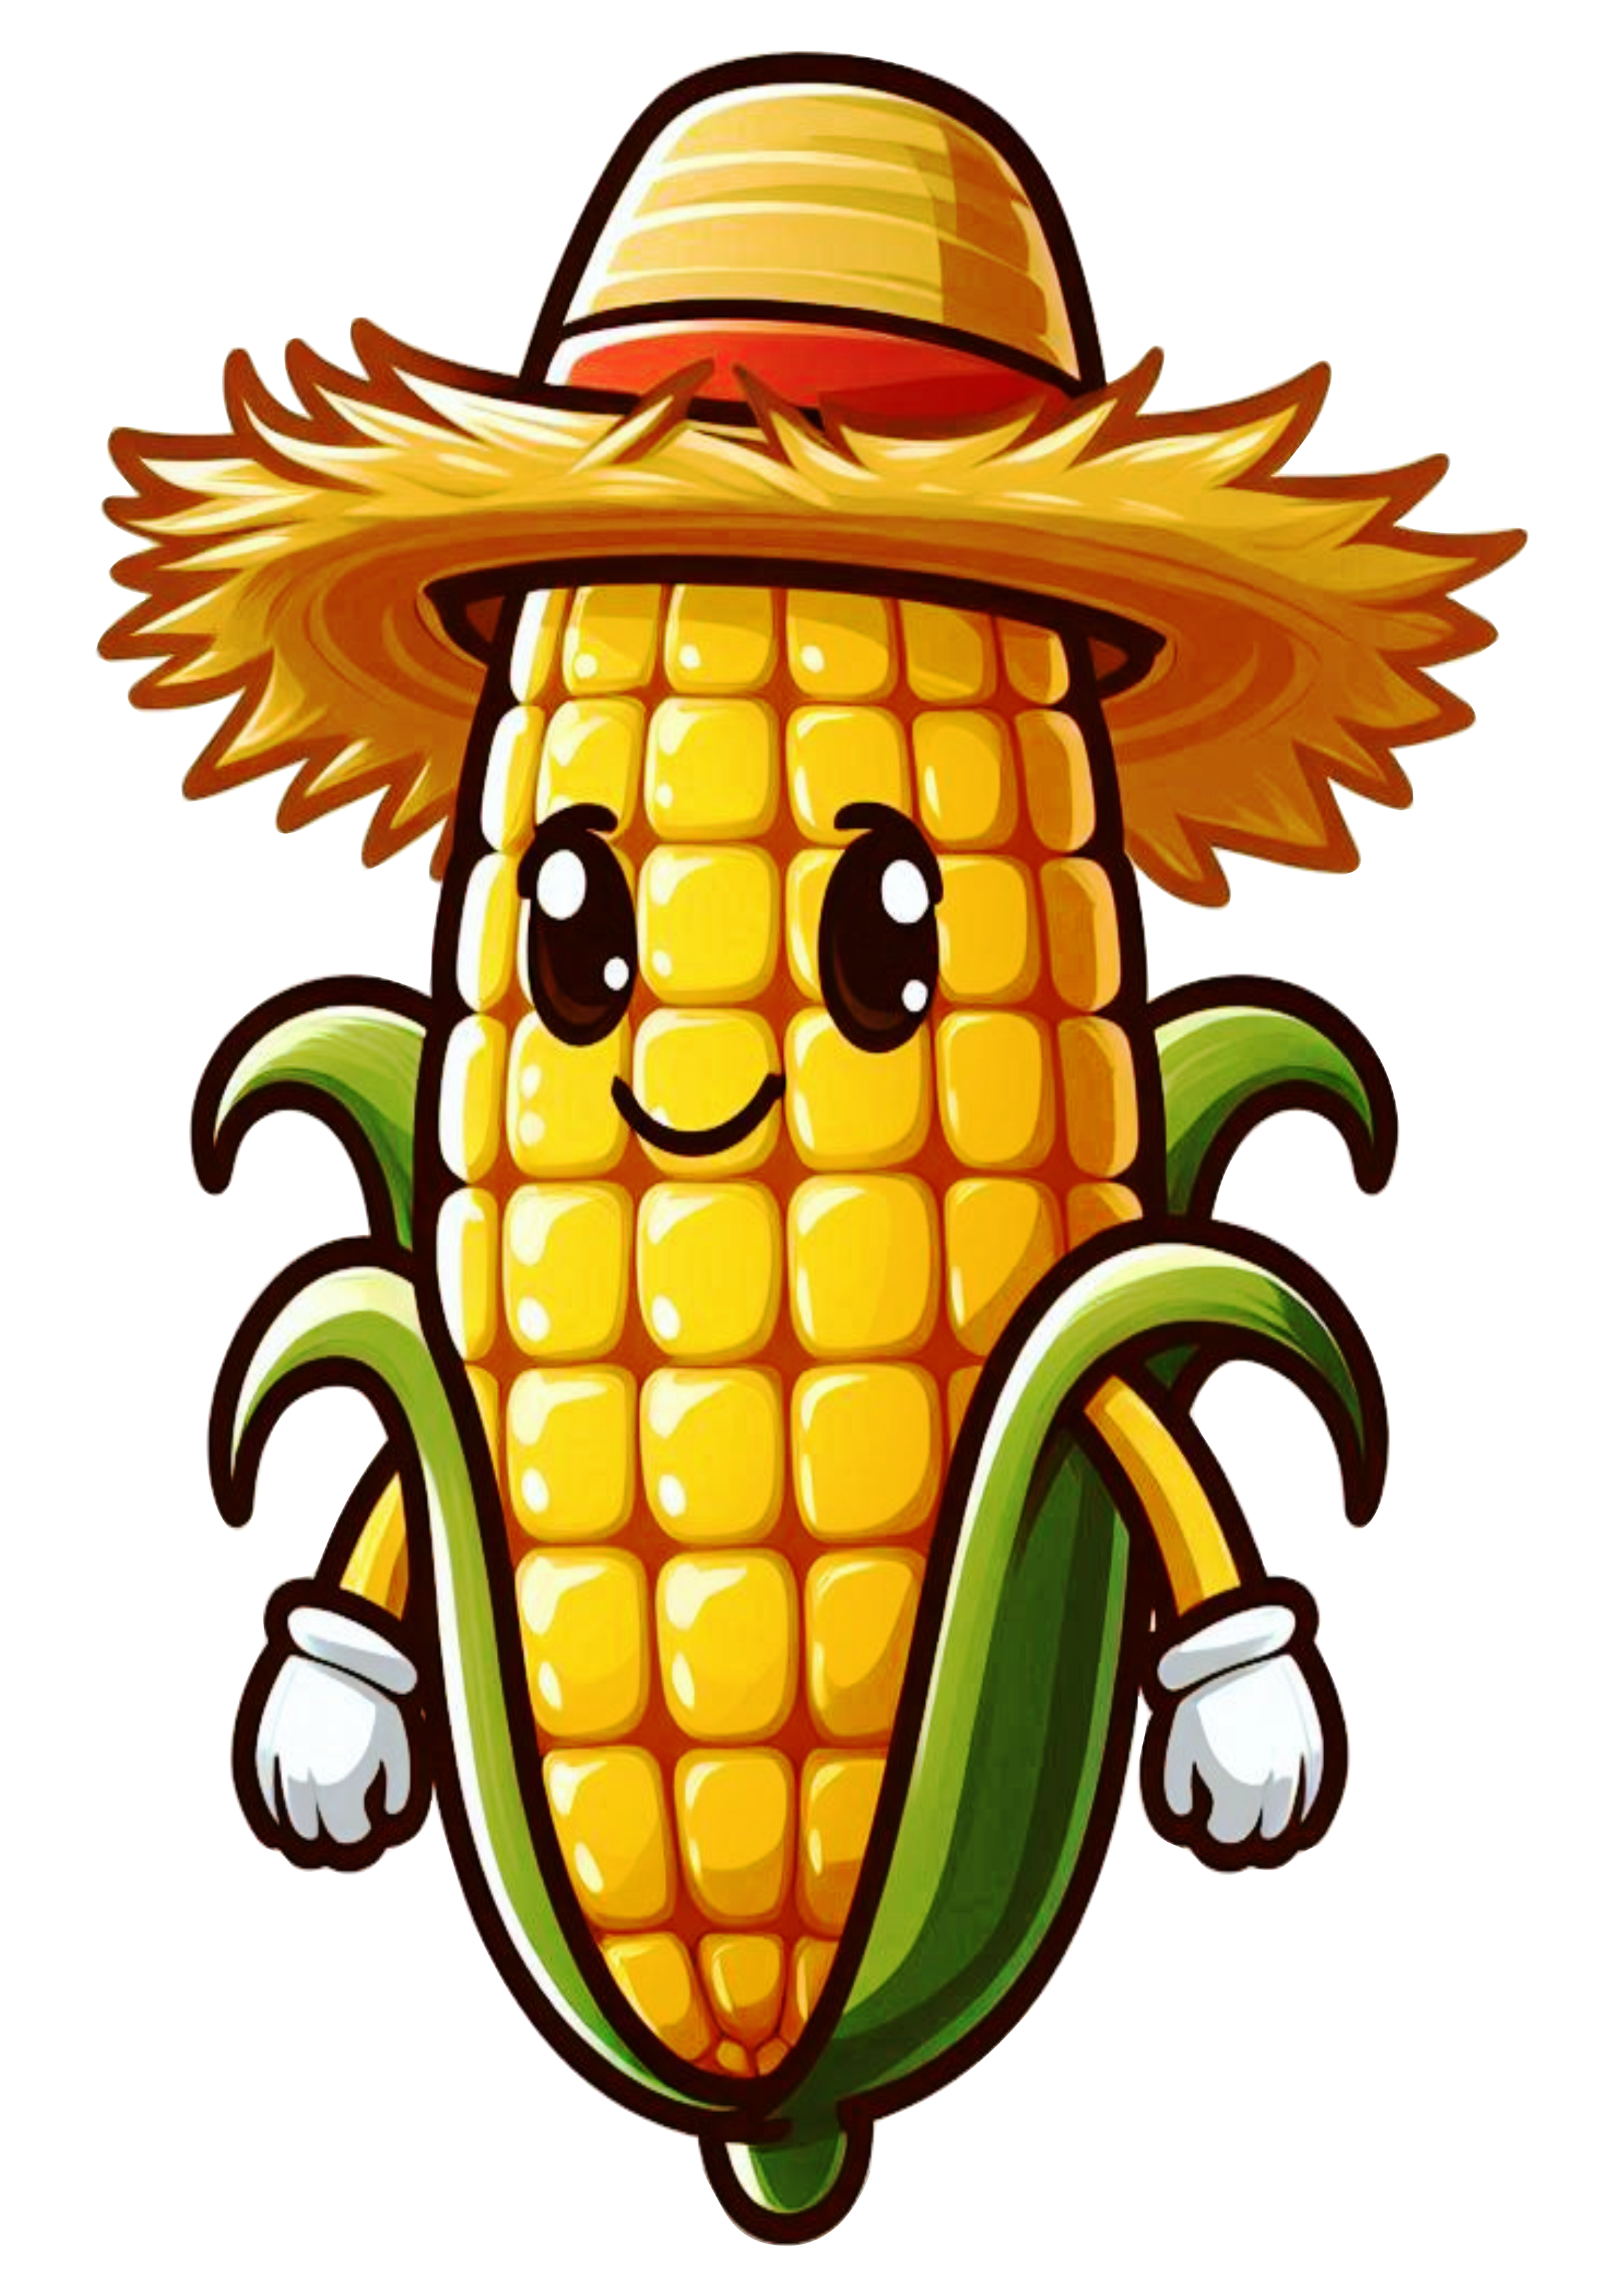 Imagens de festa junina png espiga de milho com chapéu de palha desenho simples